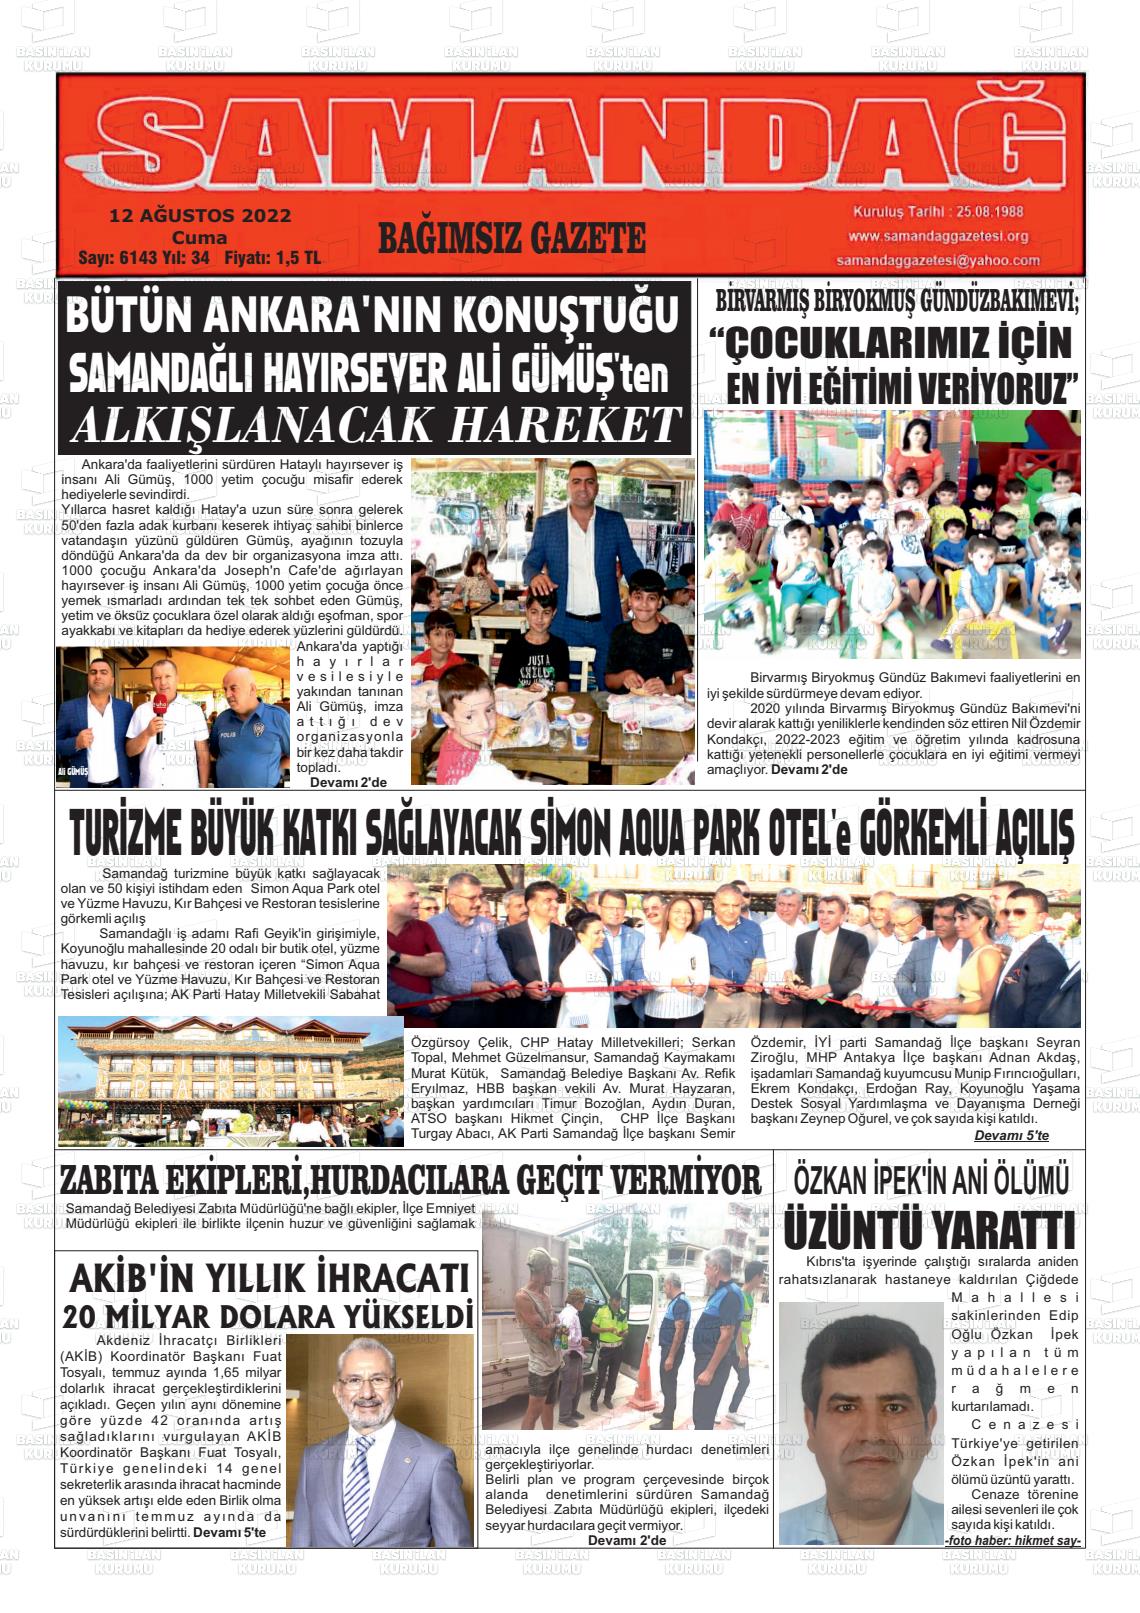 12 Ağustos 2022 Samandağ Gazete Manşeti